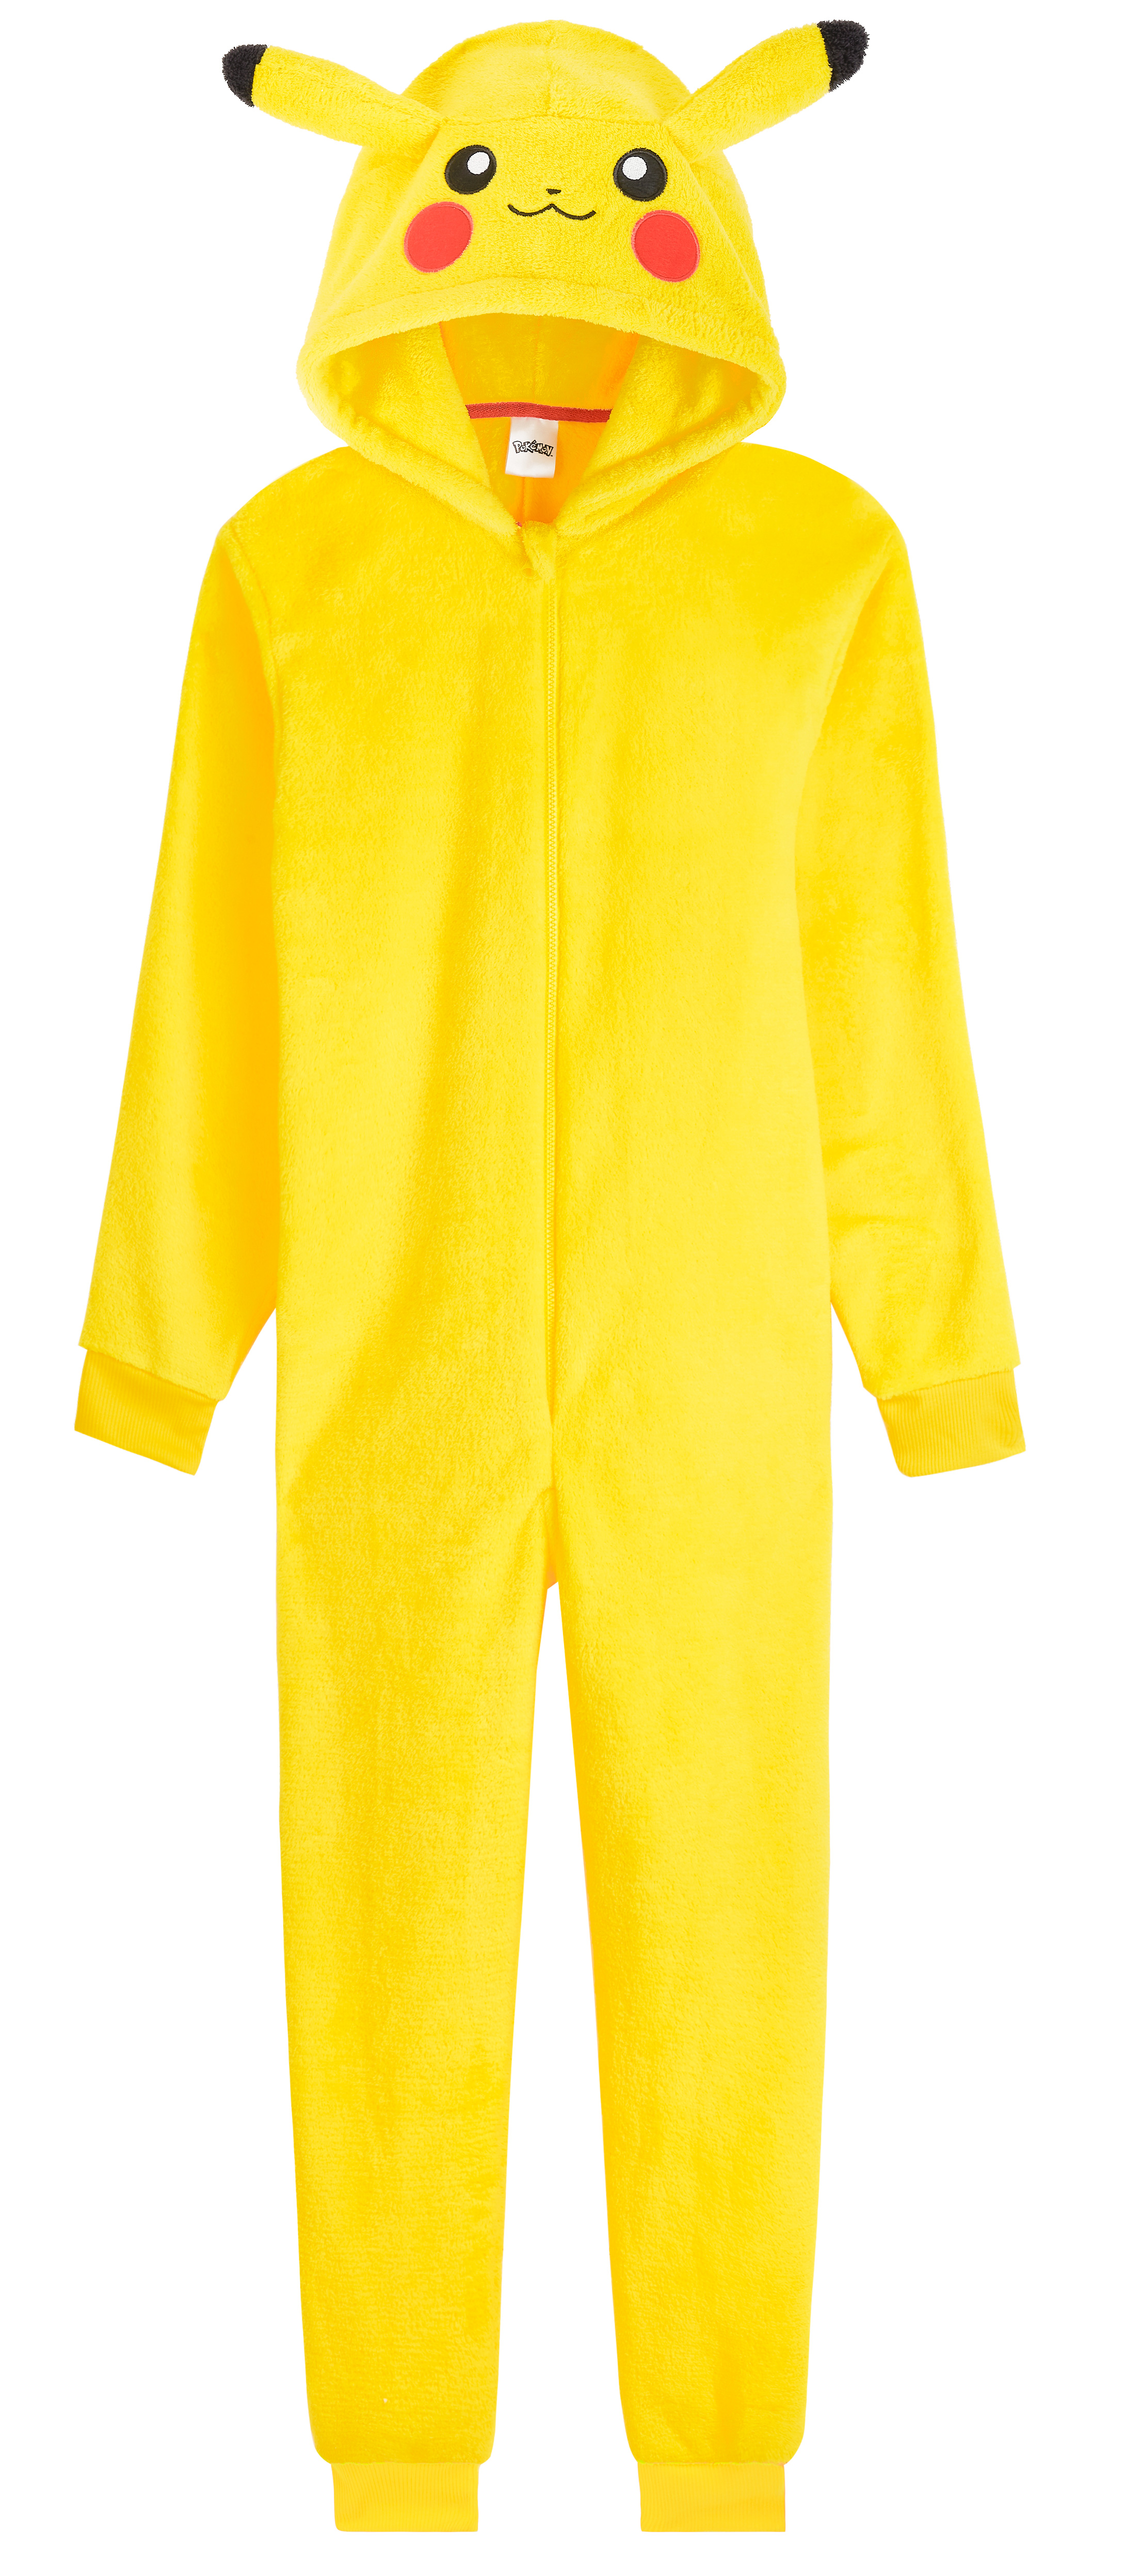 Pokemon Pikachu All in One Pyjamas Halloween Costumes Fleece for